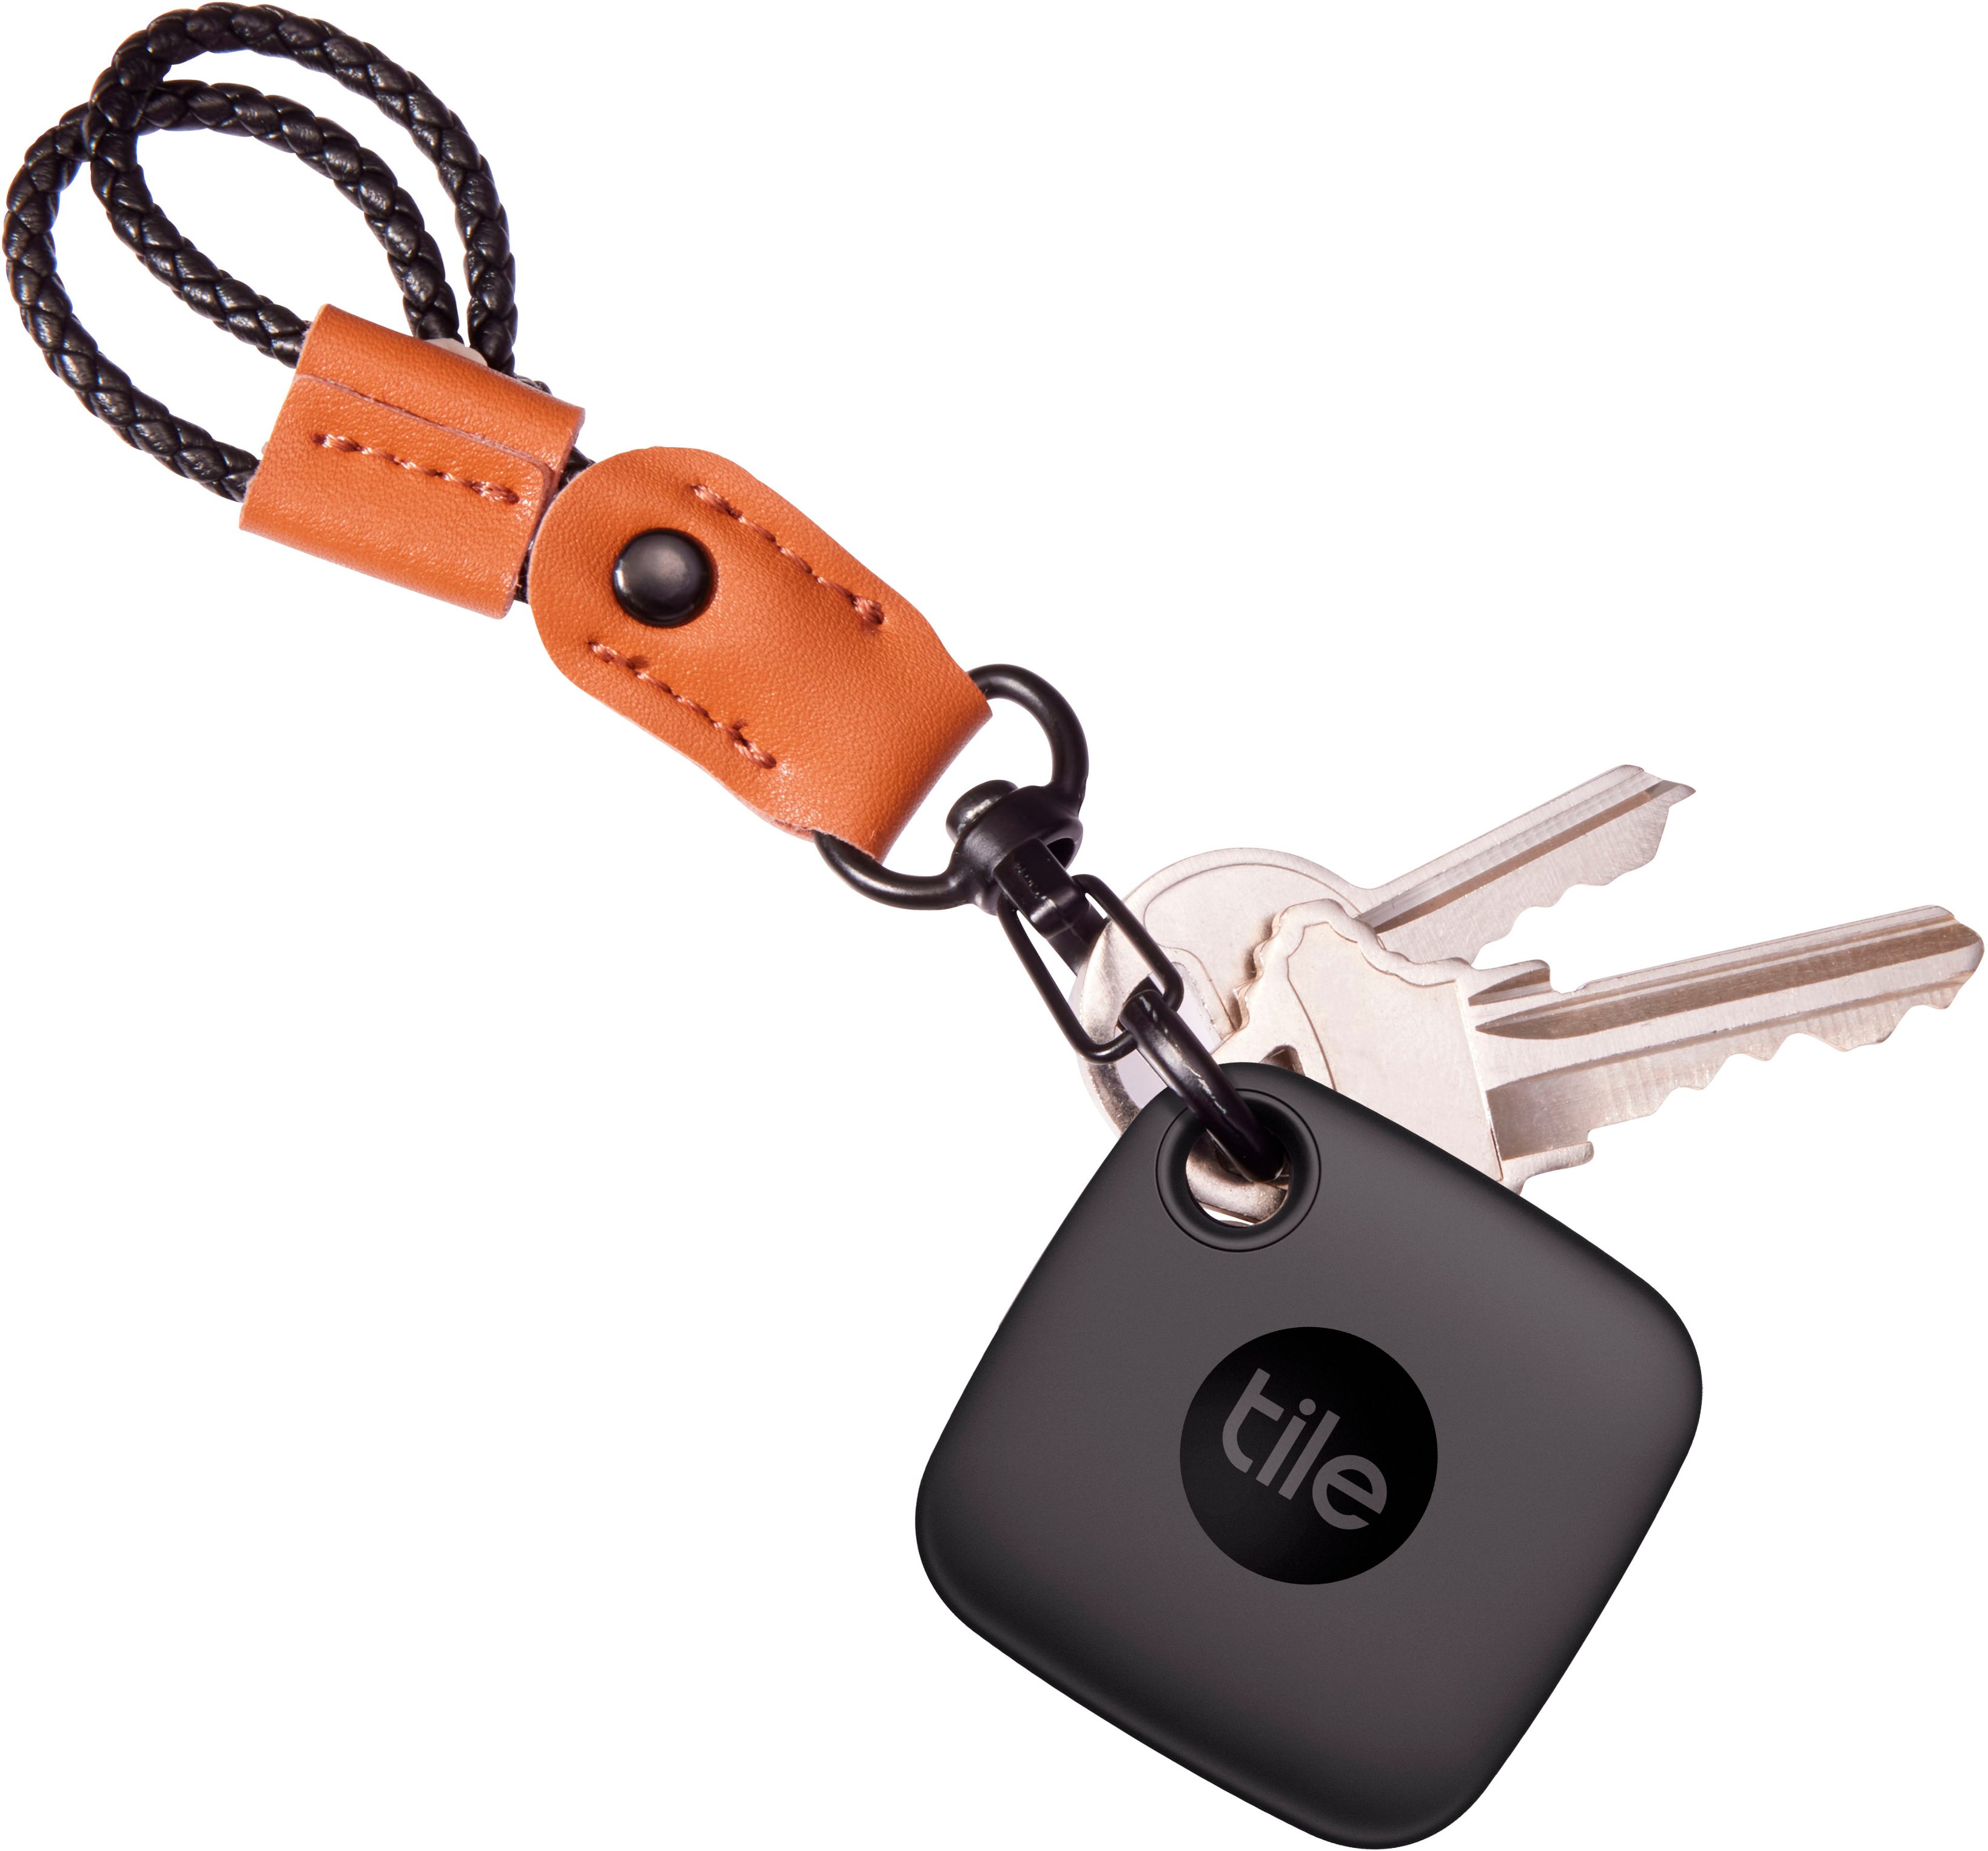  KeySmart Max Tile Key Tracker for Car Keys - Key Locator Key  Finder - GPS Keychain Tracker with Tile for Keys Tech - Keys Tile Bluetooth  Tracker Tag - Find My